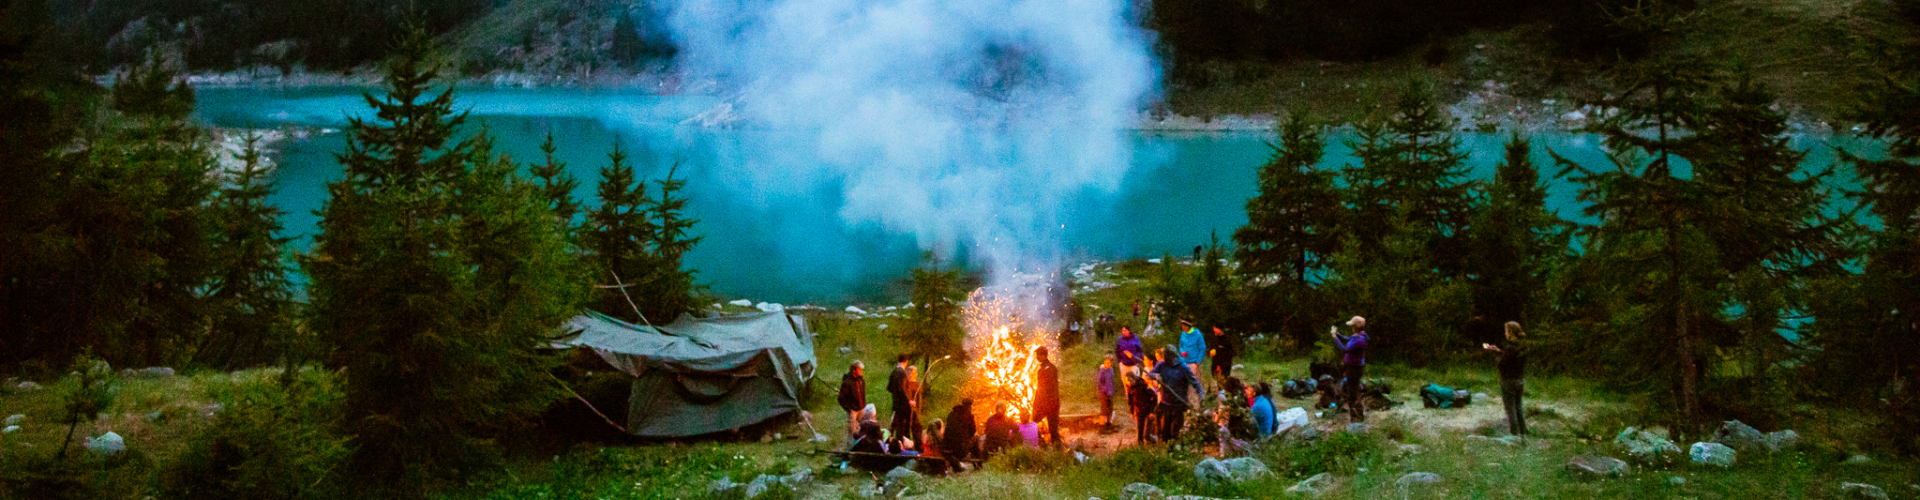 bivak vuurtje natuur overnachten gezinnen familievakantie europa italie aosta rifugio prarayer lac du moulin stuwmeer